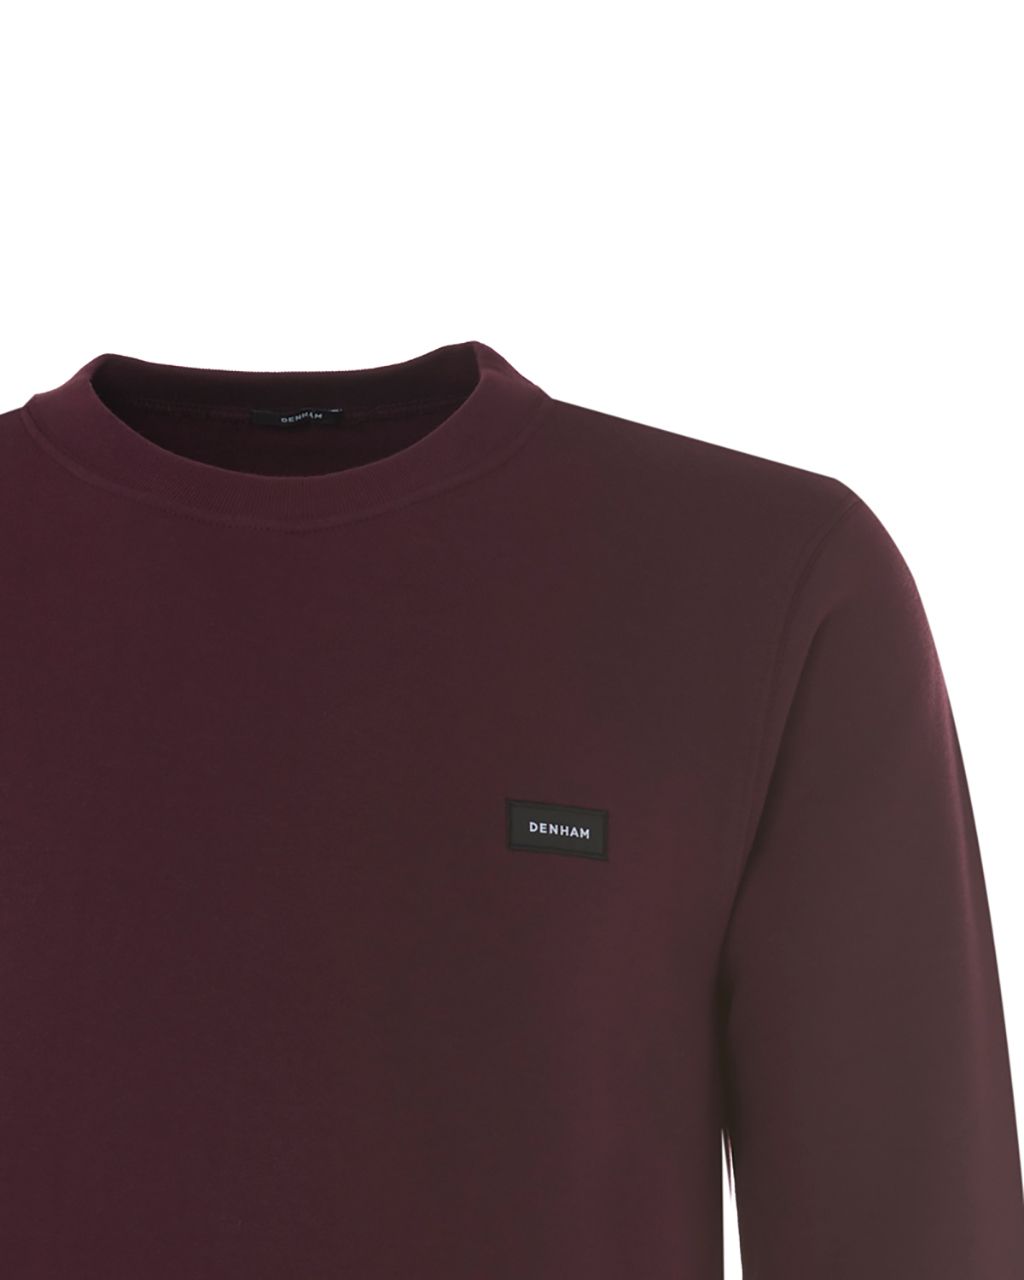 DENHAM Sweater Bordeaux 074245-001-L